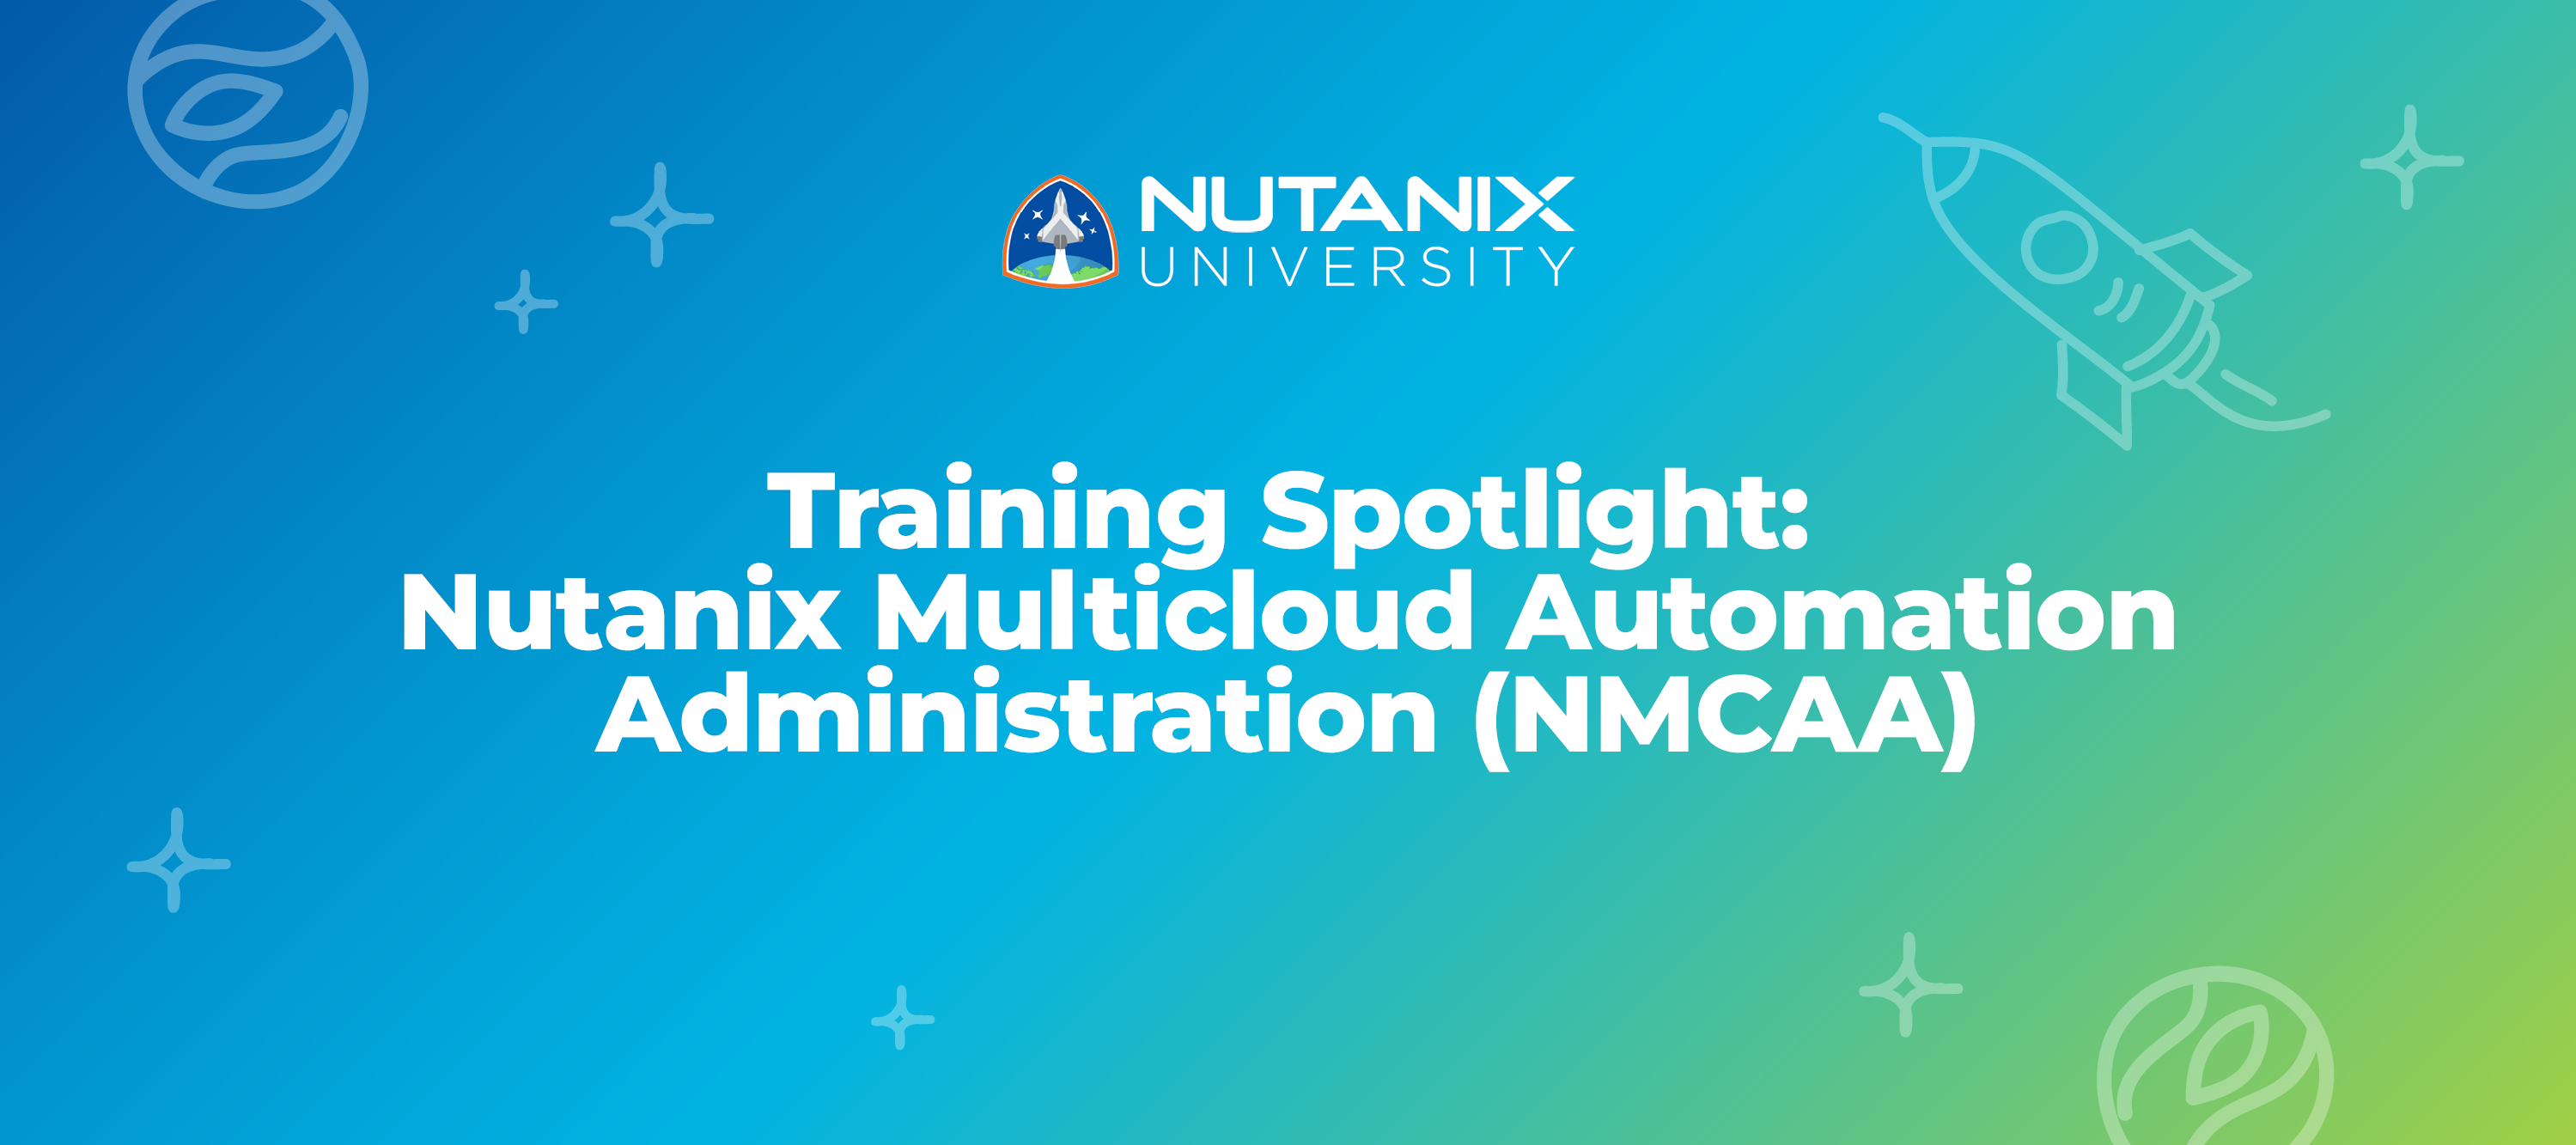 Training Spotlight: Nutanix Multicloud Automation Administration (NMCAA)